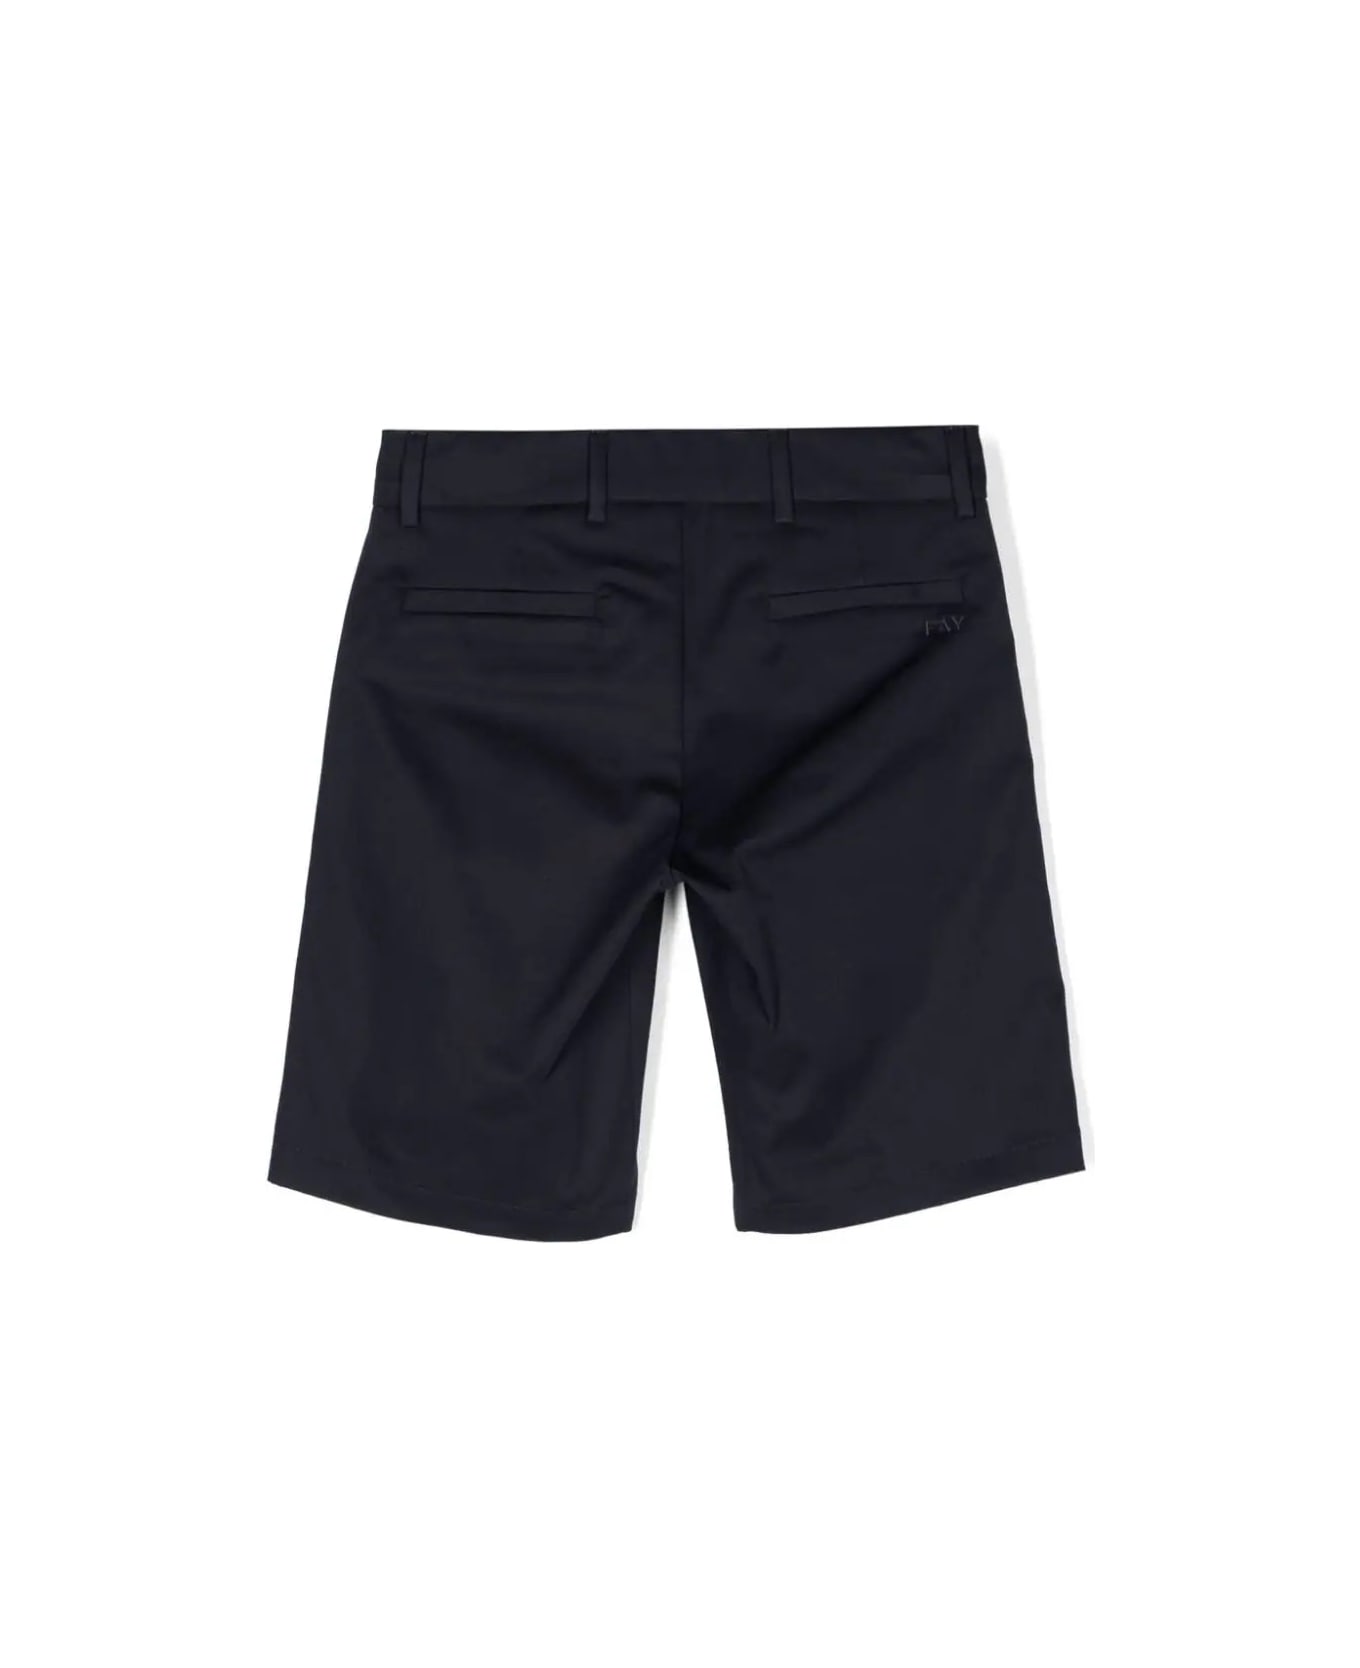 Fay Navy Blue Cotton Blend Tailored Bermuda Shorts - Blue